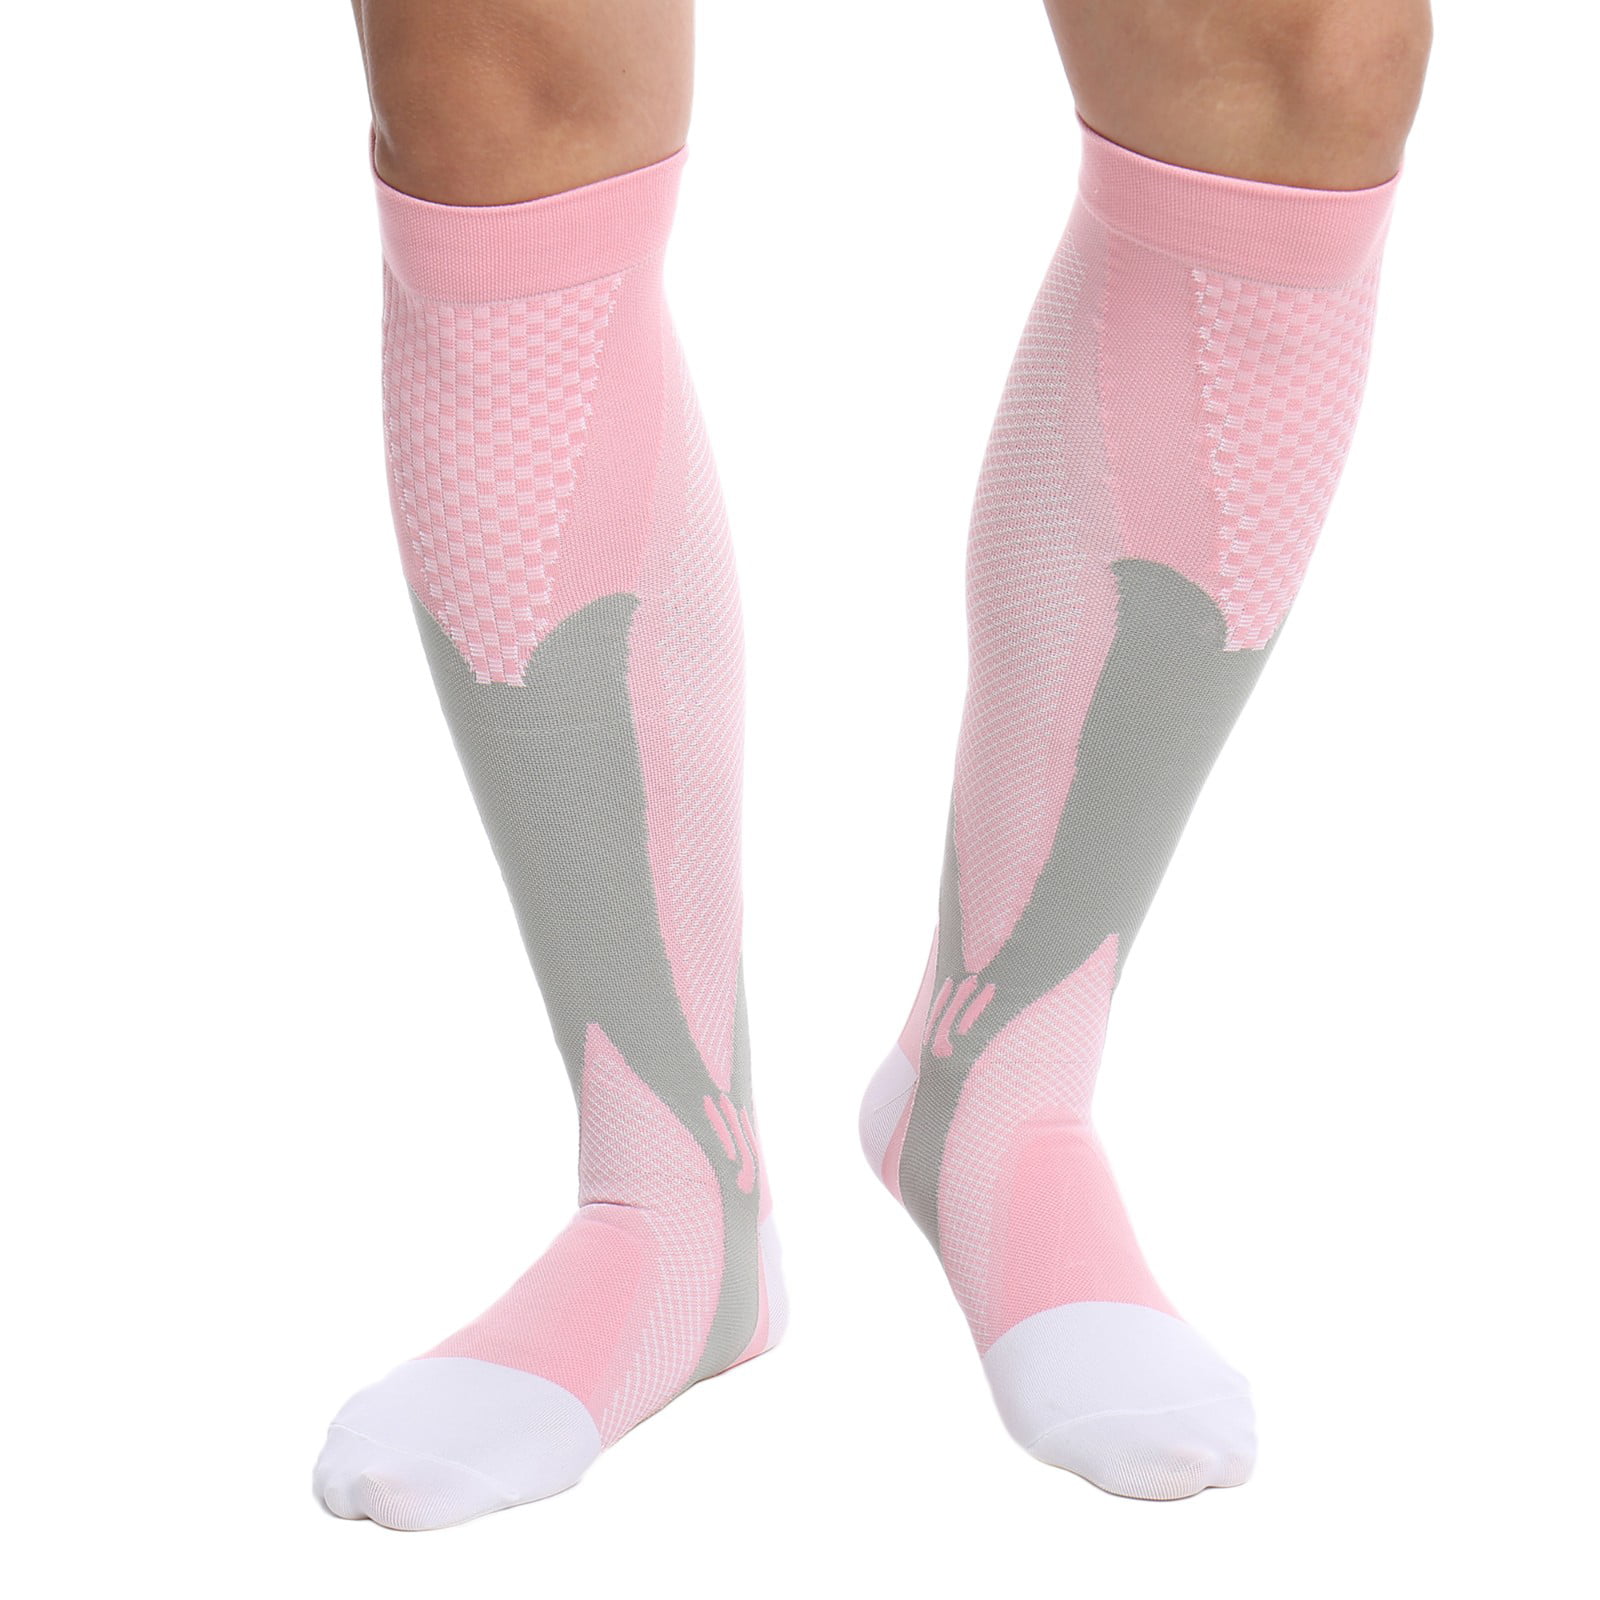 Best compression socks - mokasinvisions